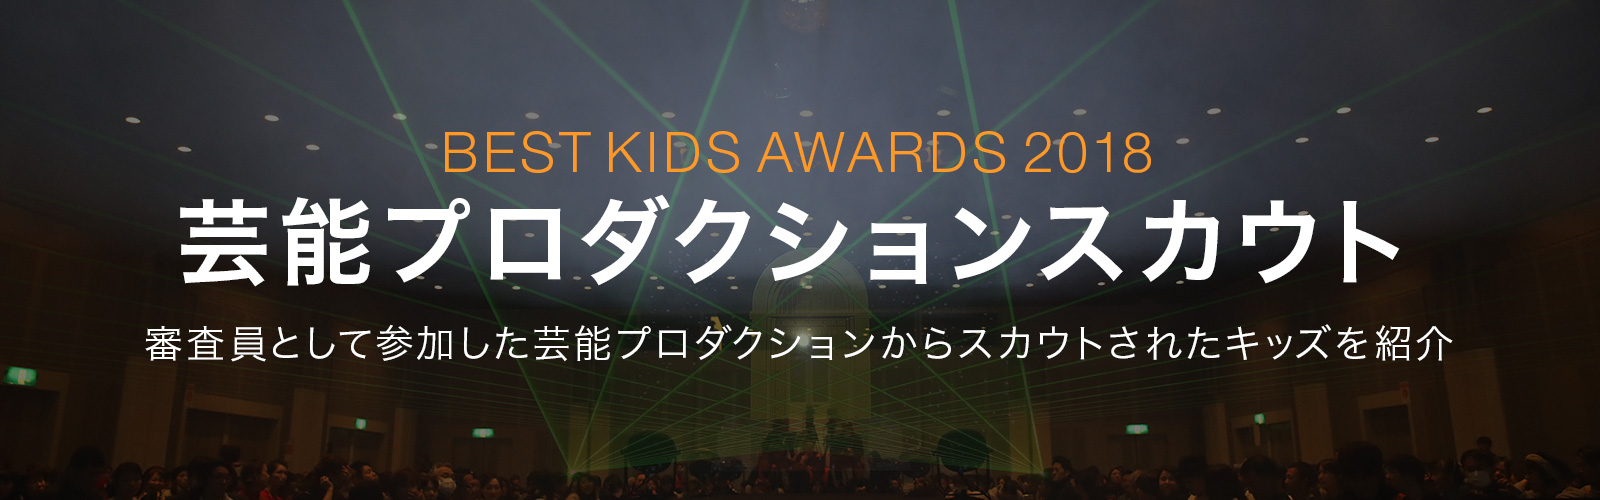 BEST KIDS AWARDS 2018 芸能プロダクションスカウト